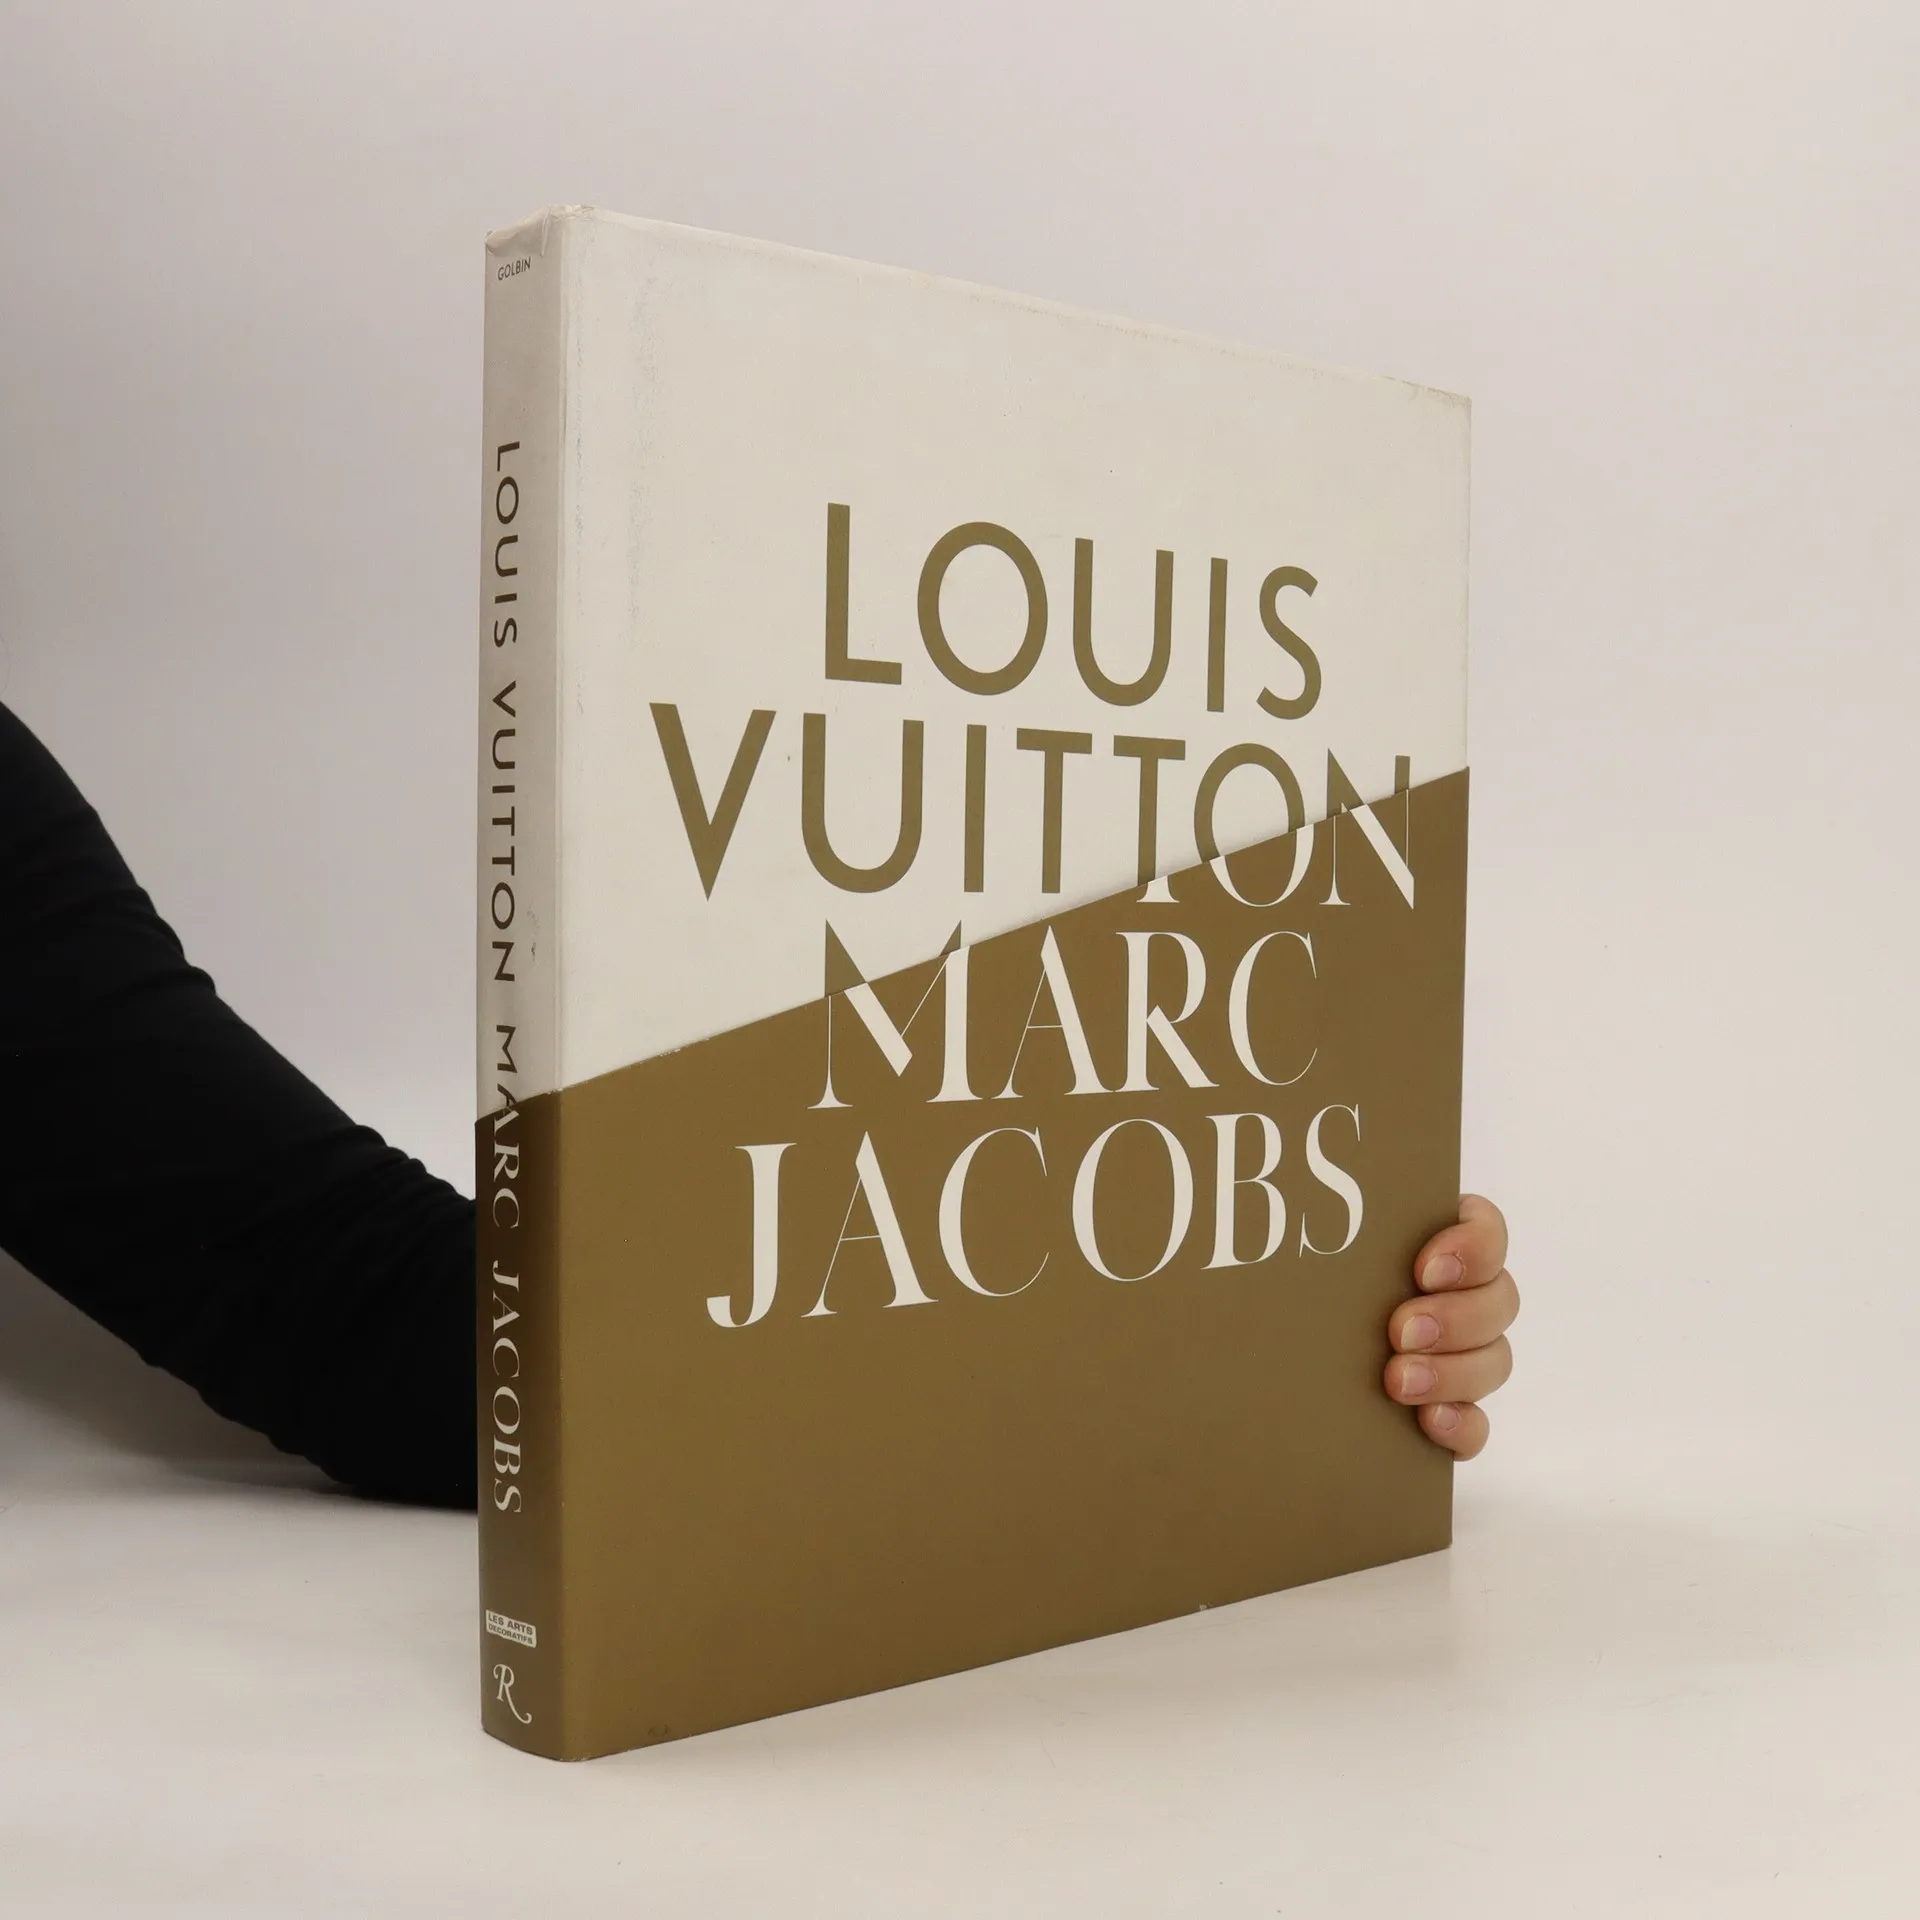 Louis Vuitton / Marc Jacobs Book: By Pamela Golbin